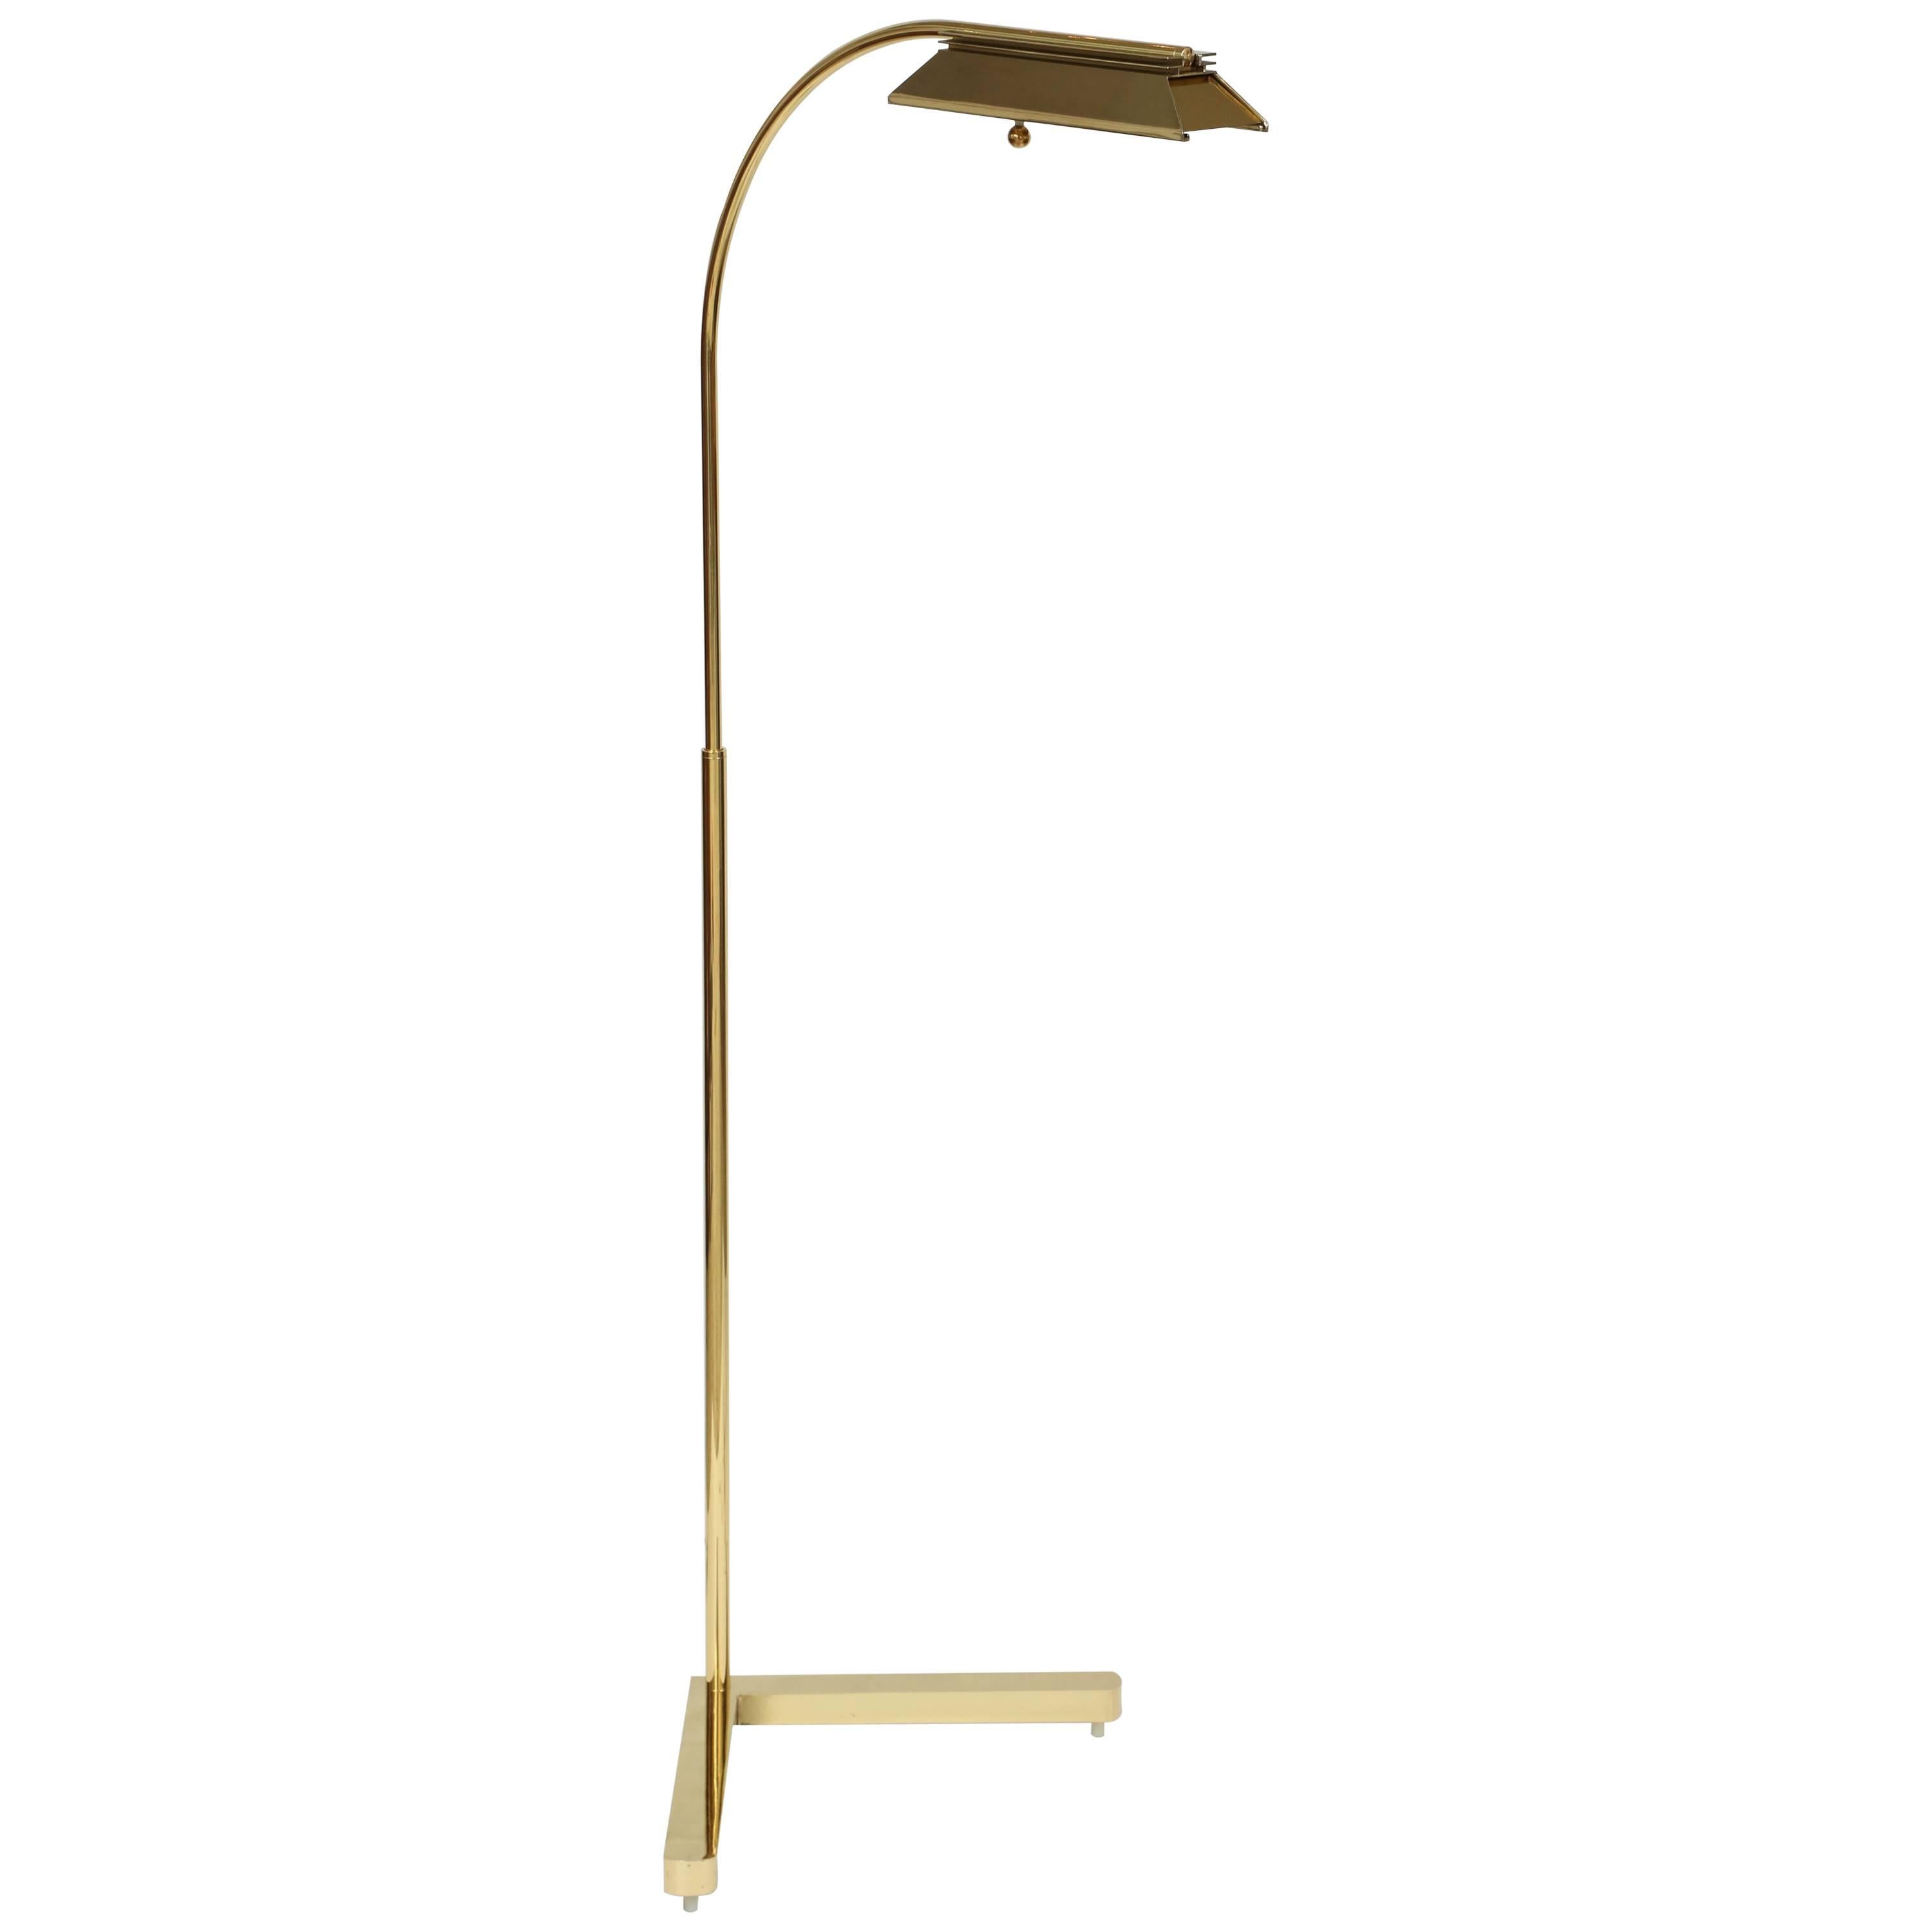  Casella Lighting Adjustable Floor Lamp in Polished Brass